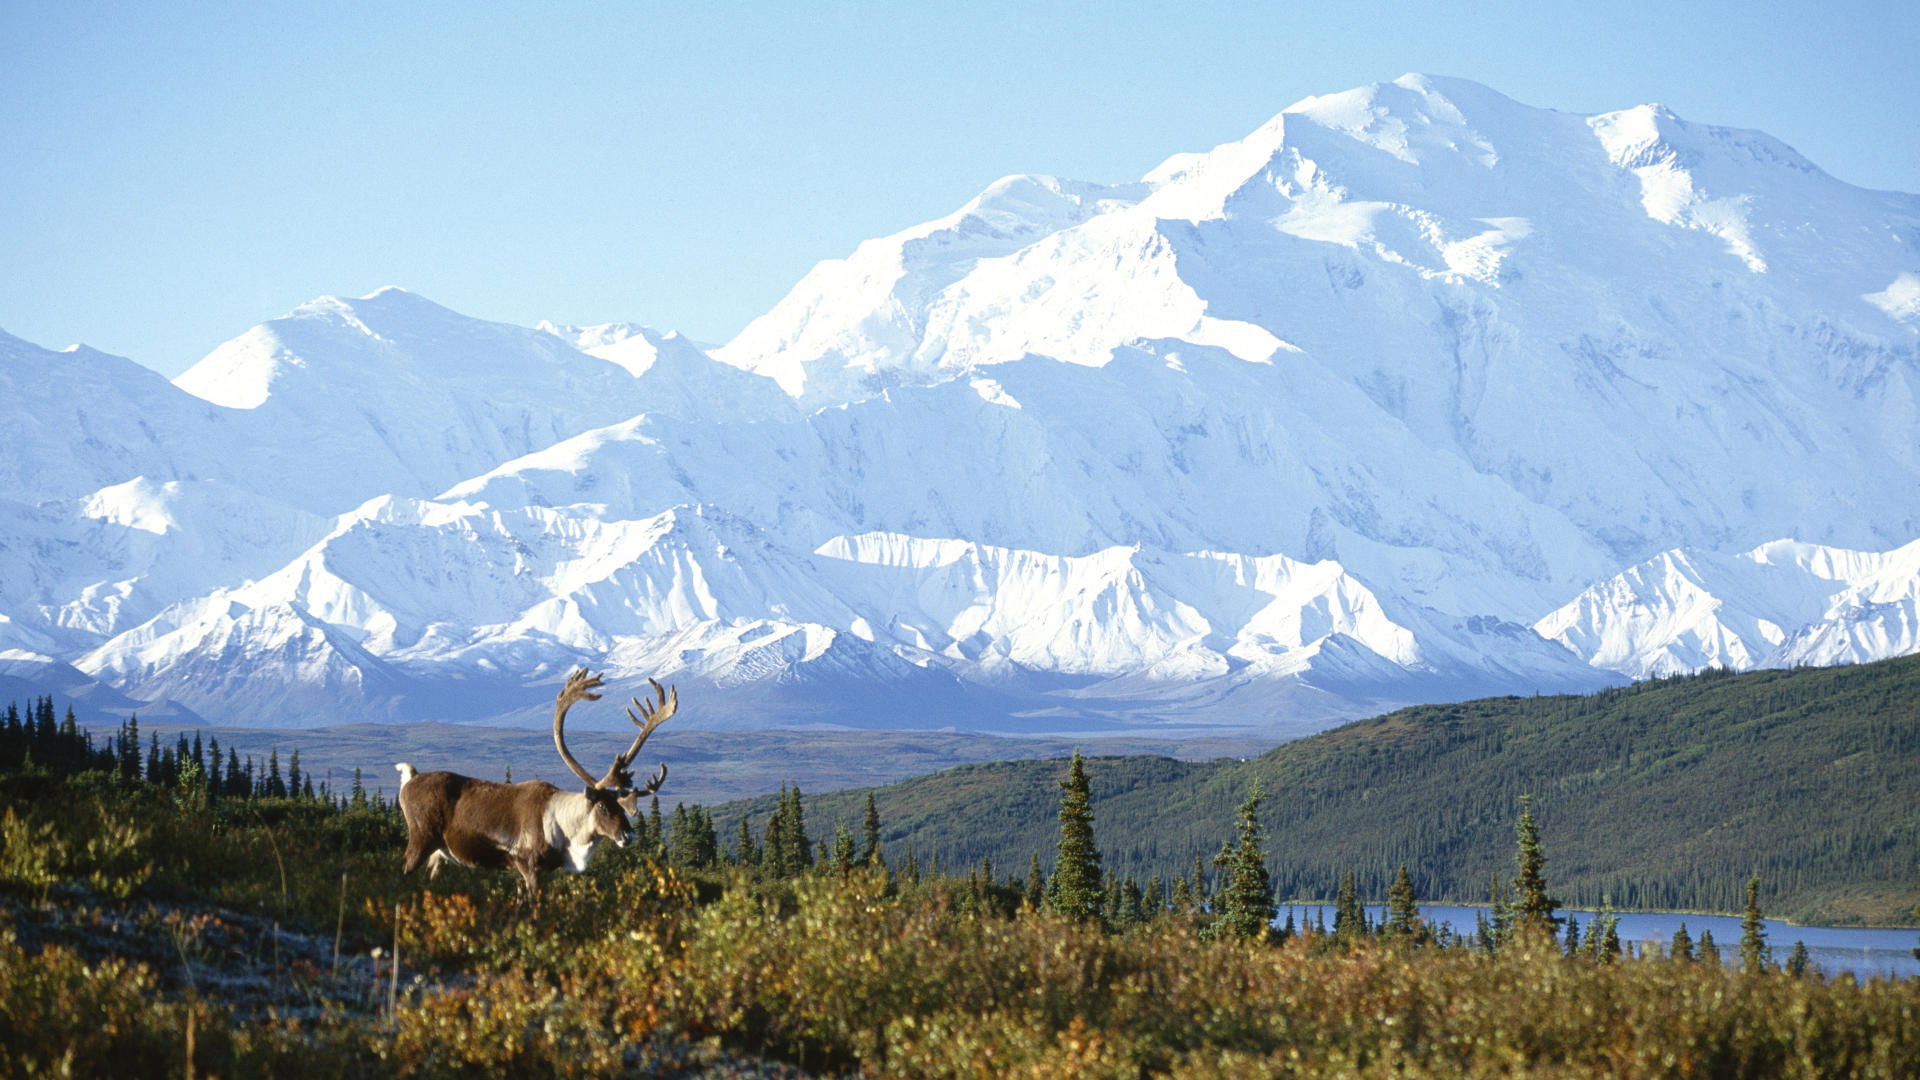 Alaska Cool Background And Wallpaper For Your Desktop